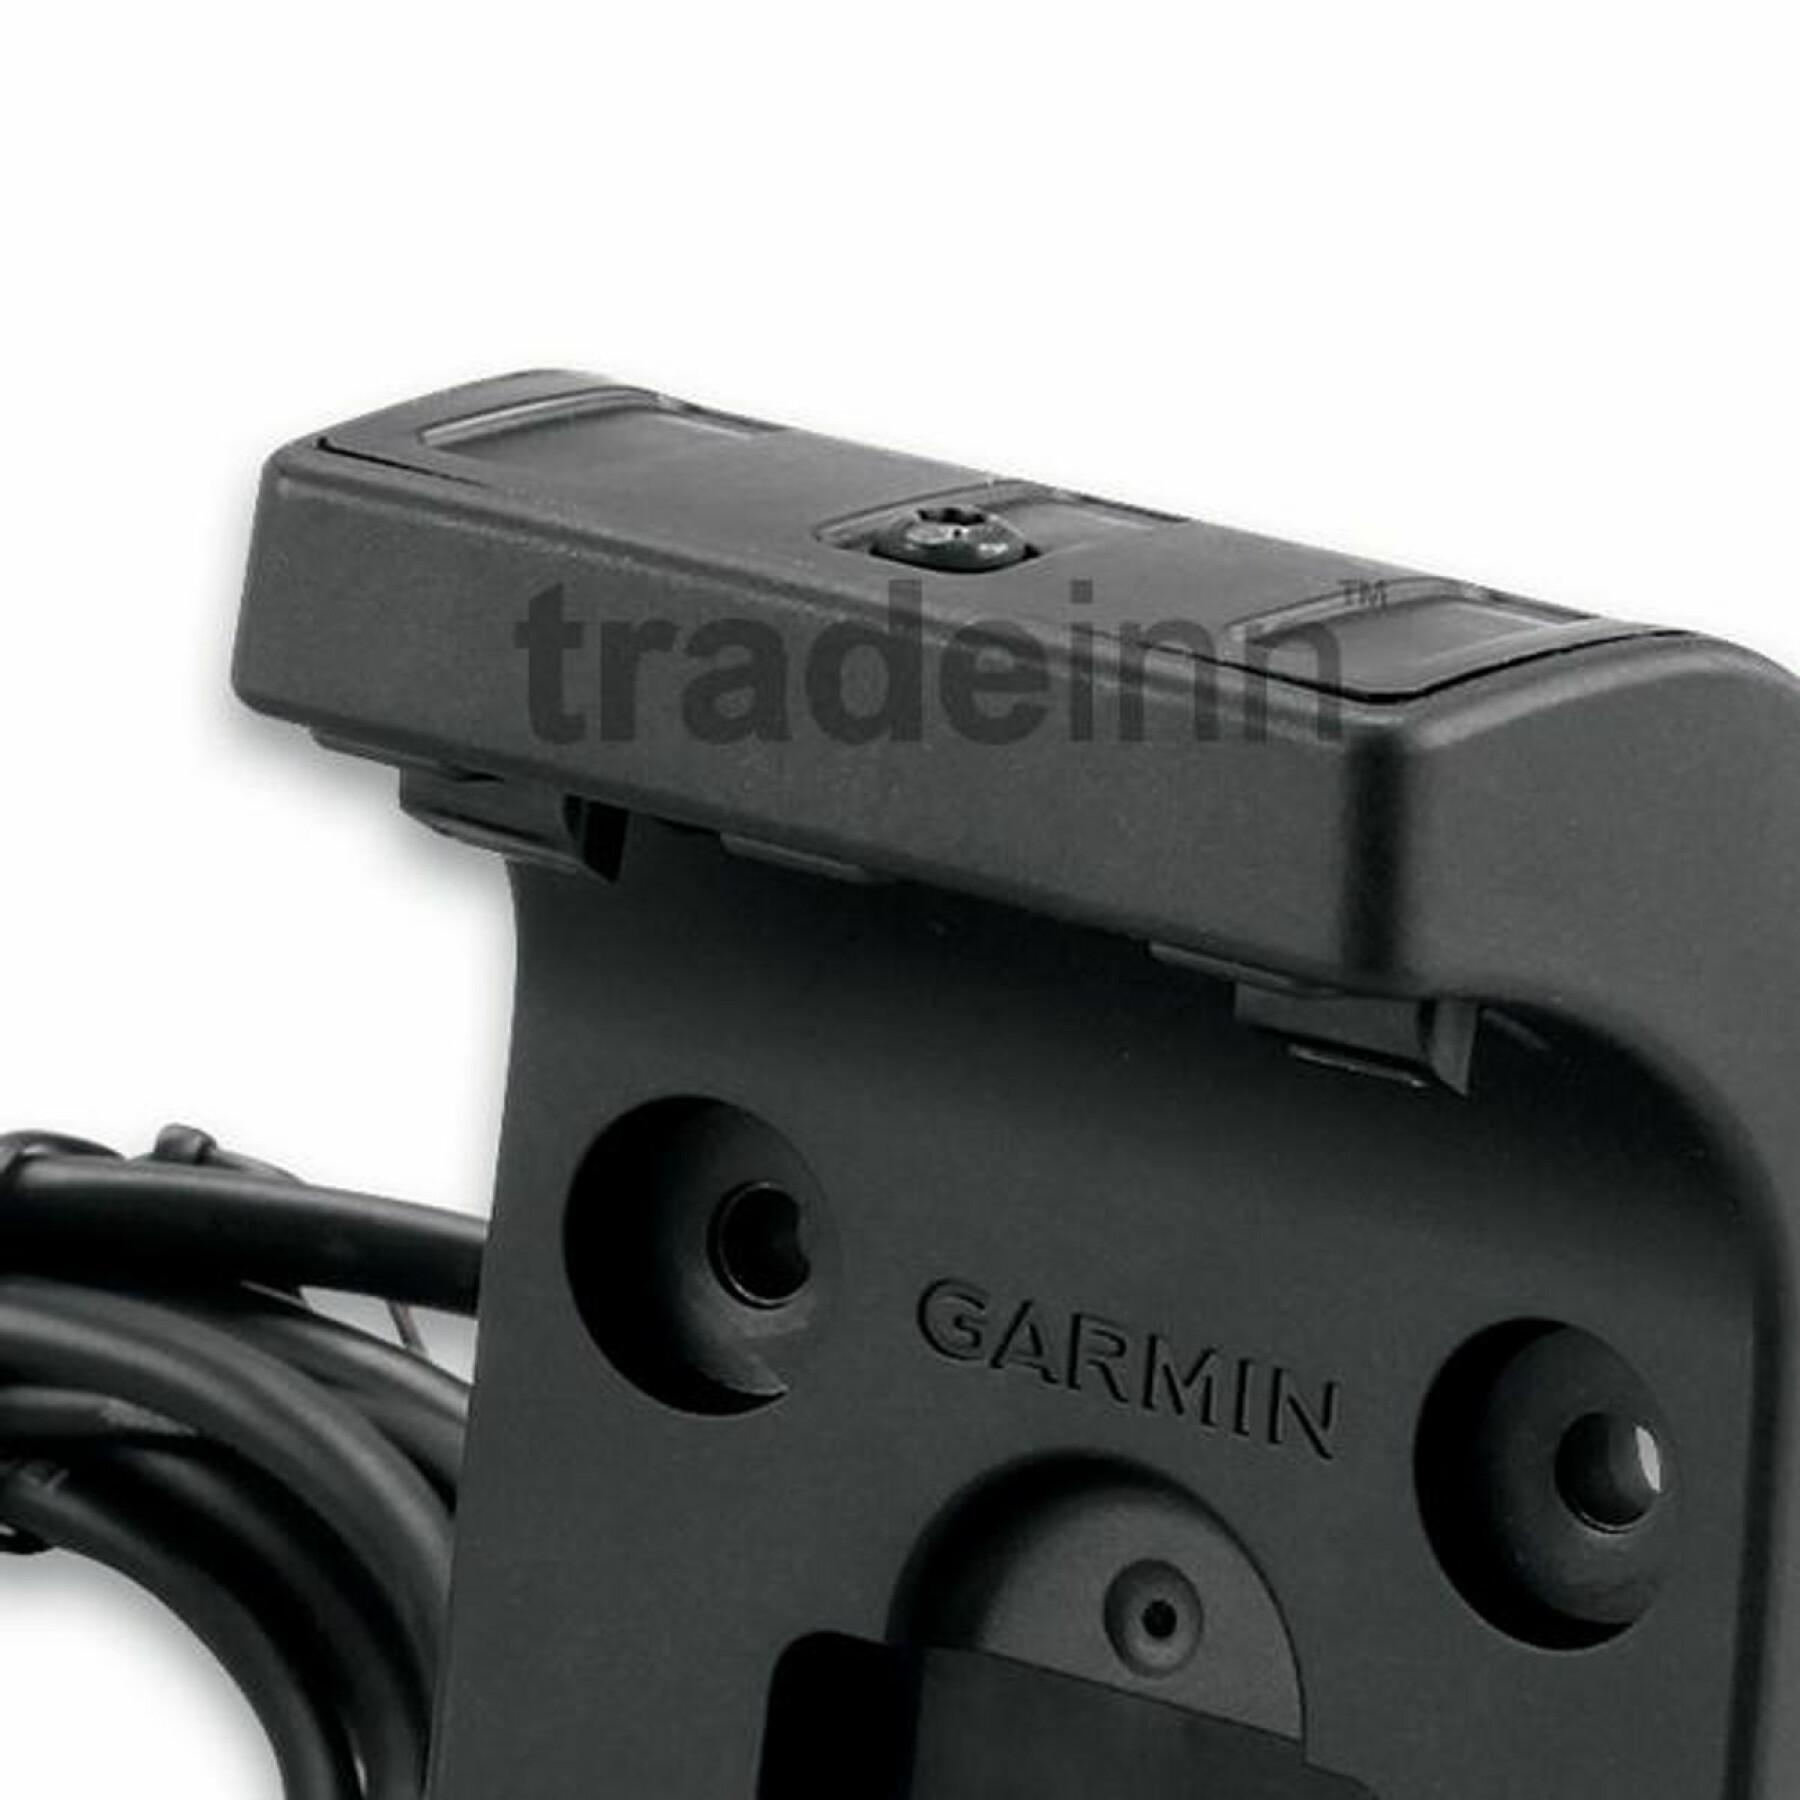 Supporto Garmin moto avec câble alimentation/audio